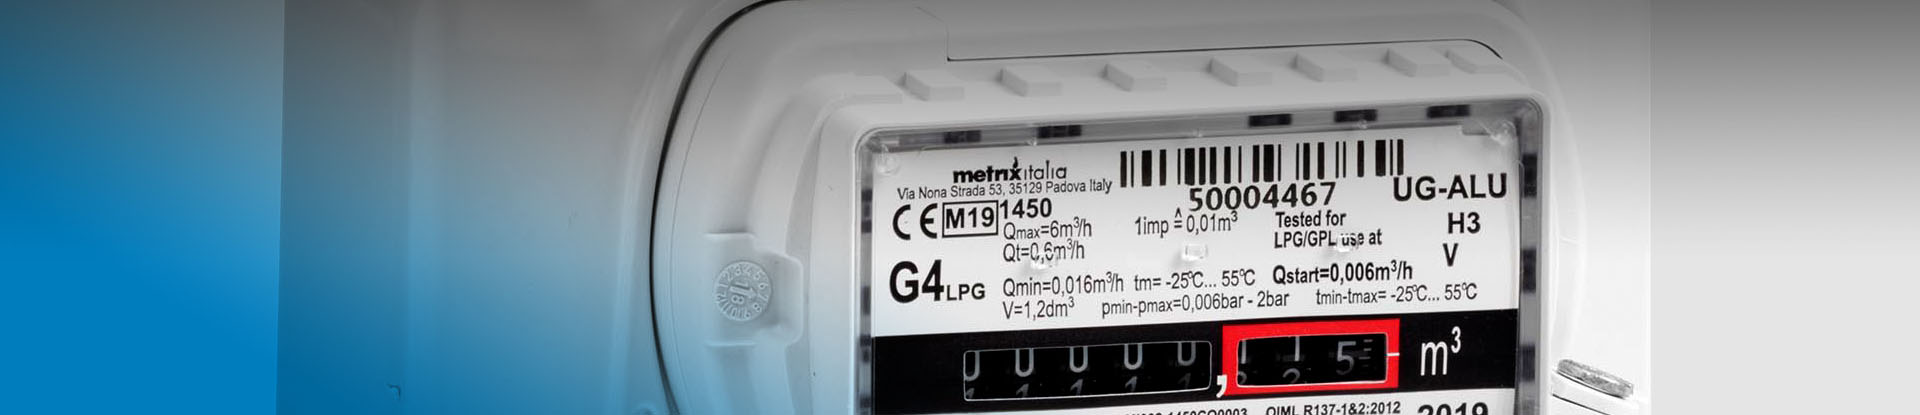 gas smart meter battery | Metrixitalia.it